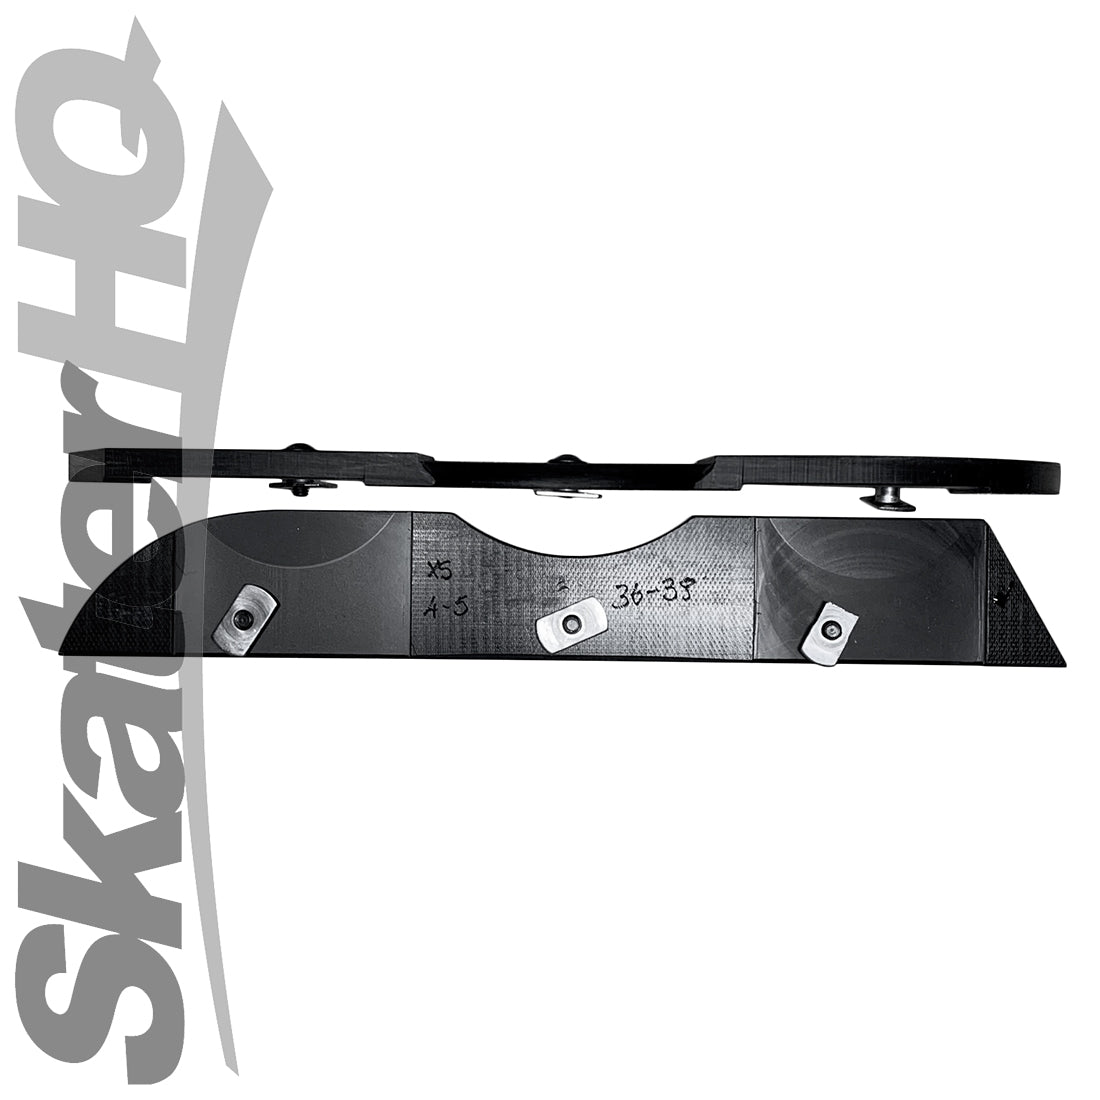 Sliqx Aeon Soul Plate Sliders - EU39-40 - Black Inline Hardware and Parts